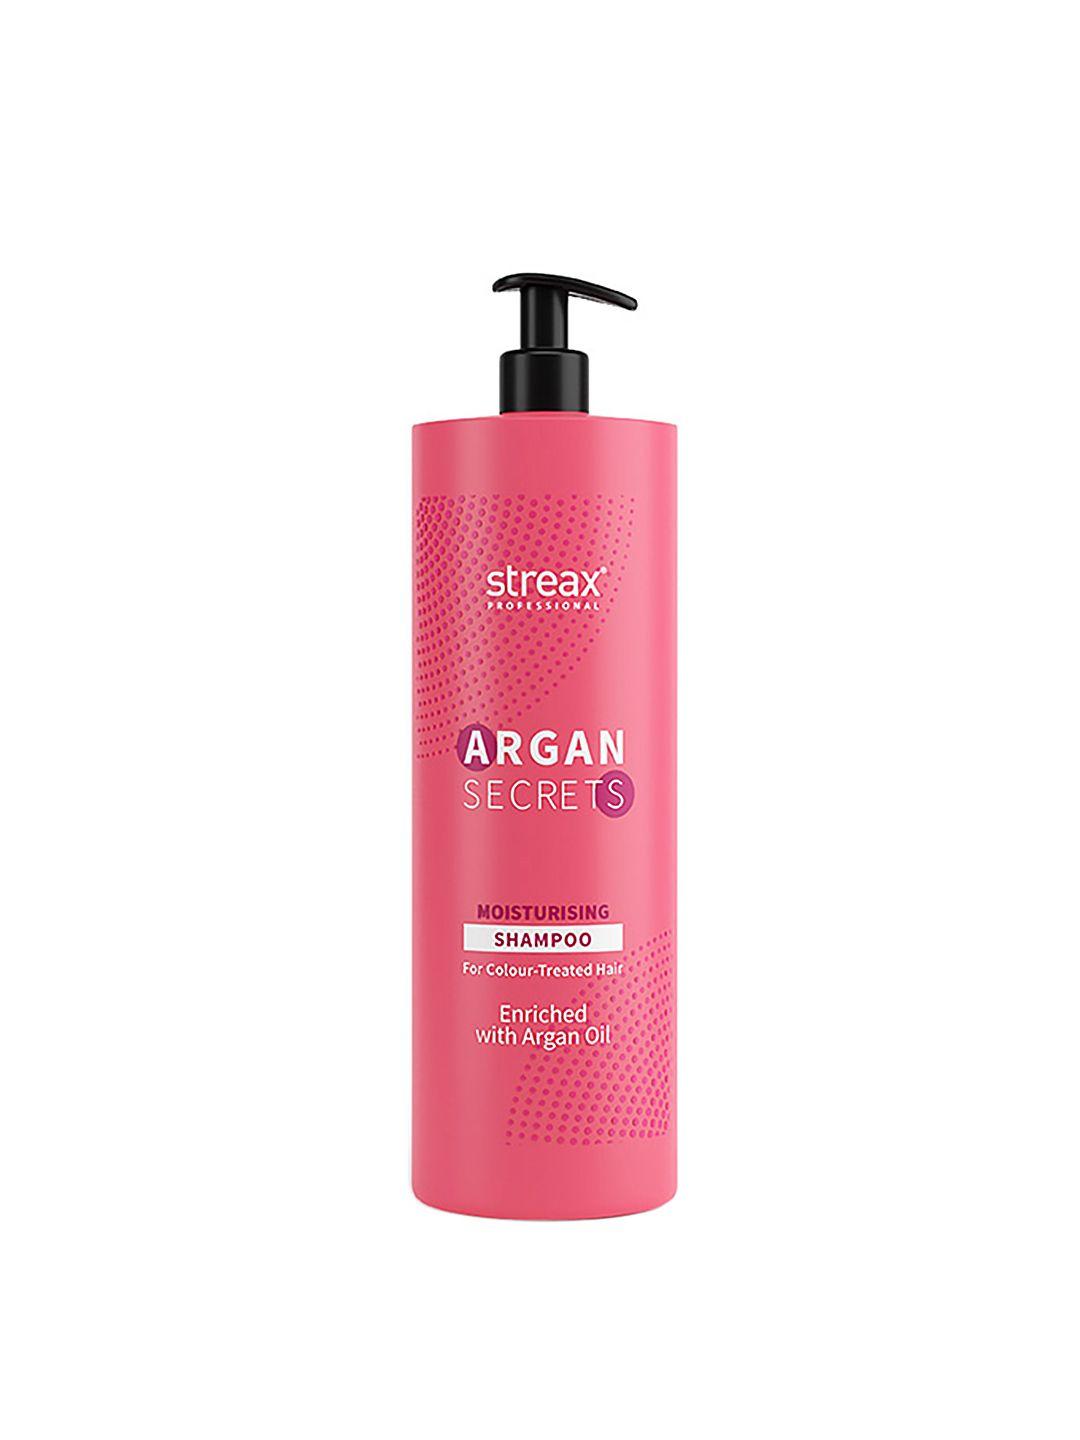 streax professional argan secrets moisturising shampoo for colour-treated hair - 1.5l